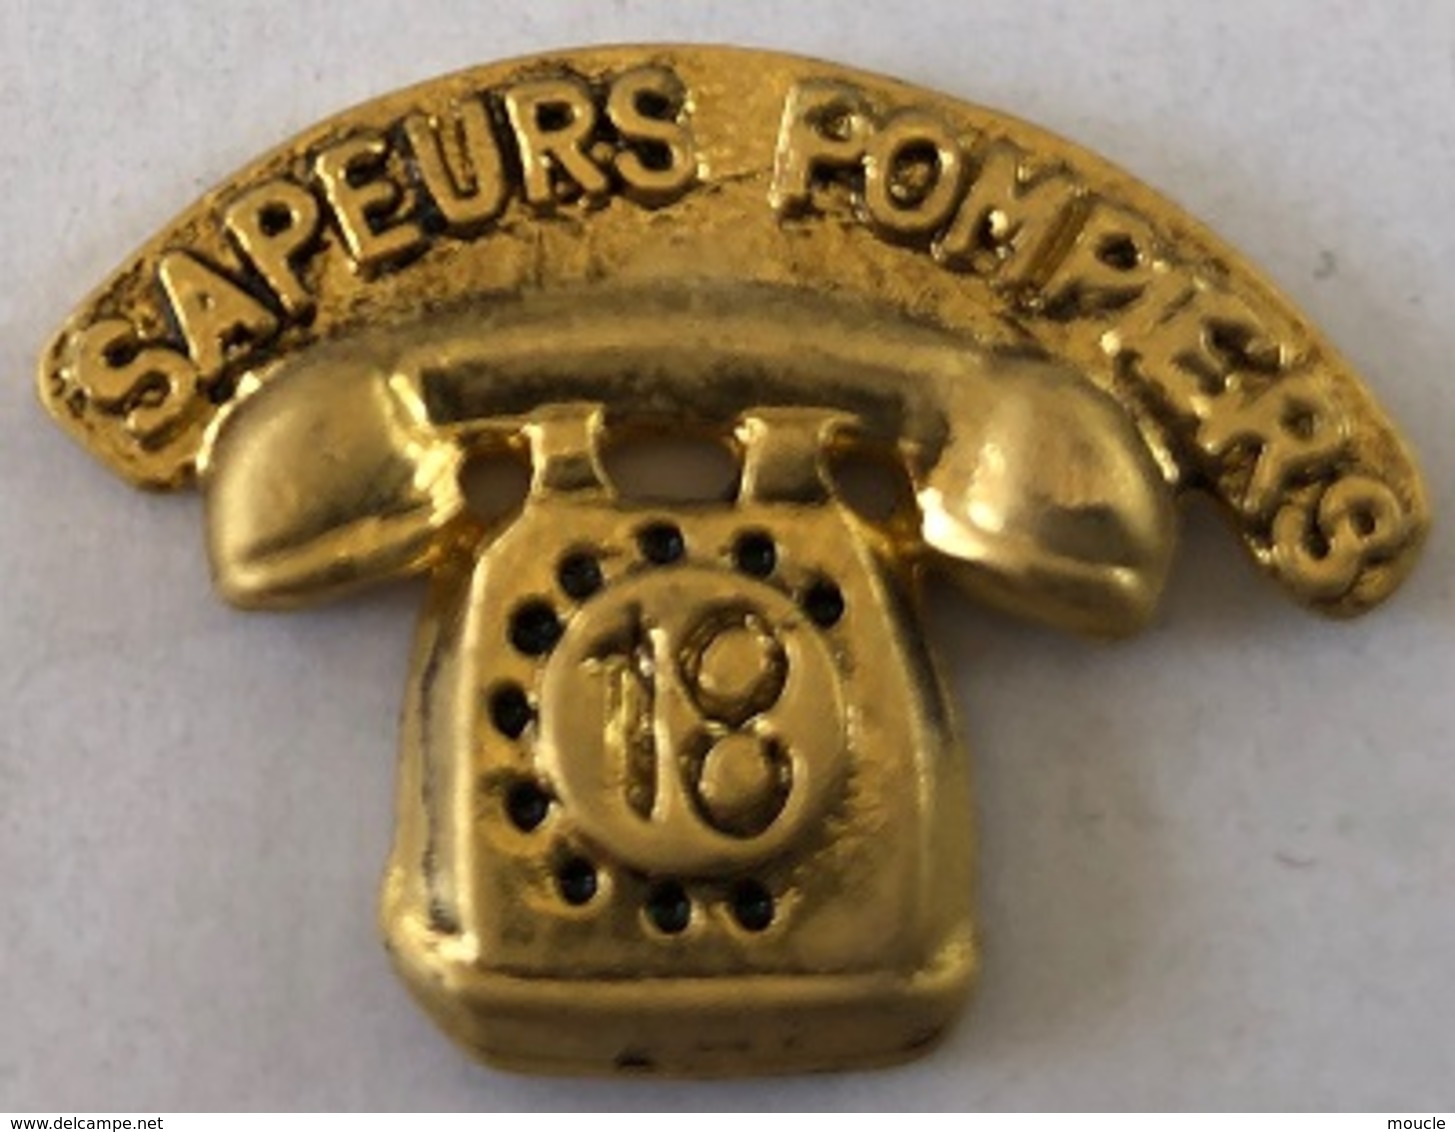 SAPEURS POMPIERS - TELEPHONE 18  - FRANCE - TELEFONO POMPIERE - PHONE  FIREFIGHTER - TELEFON FEUERWEHRMANN - (25) - Firemen